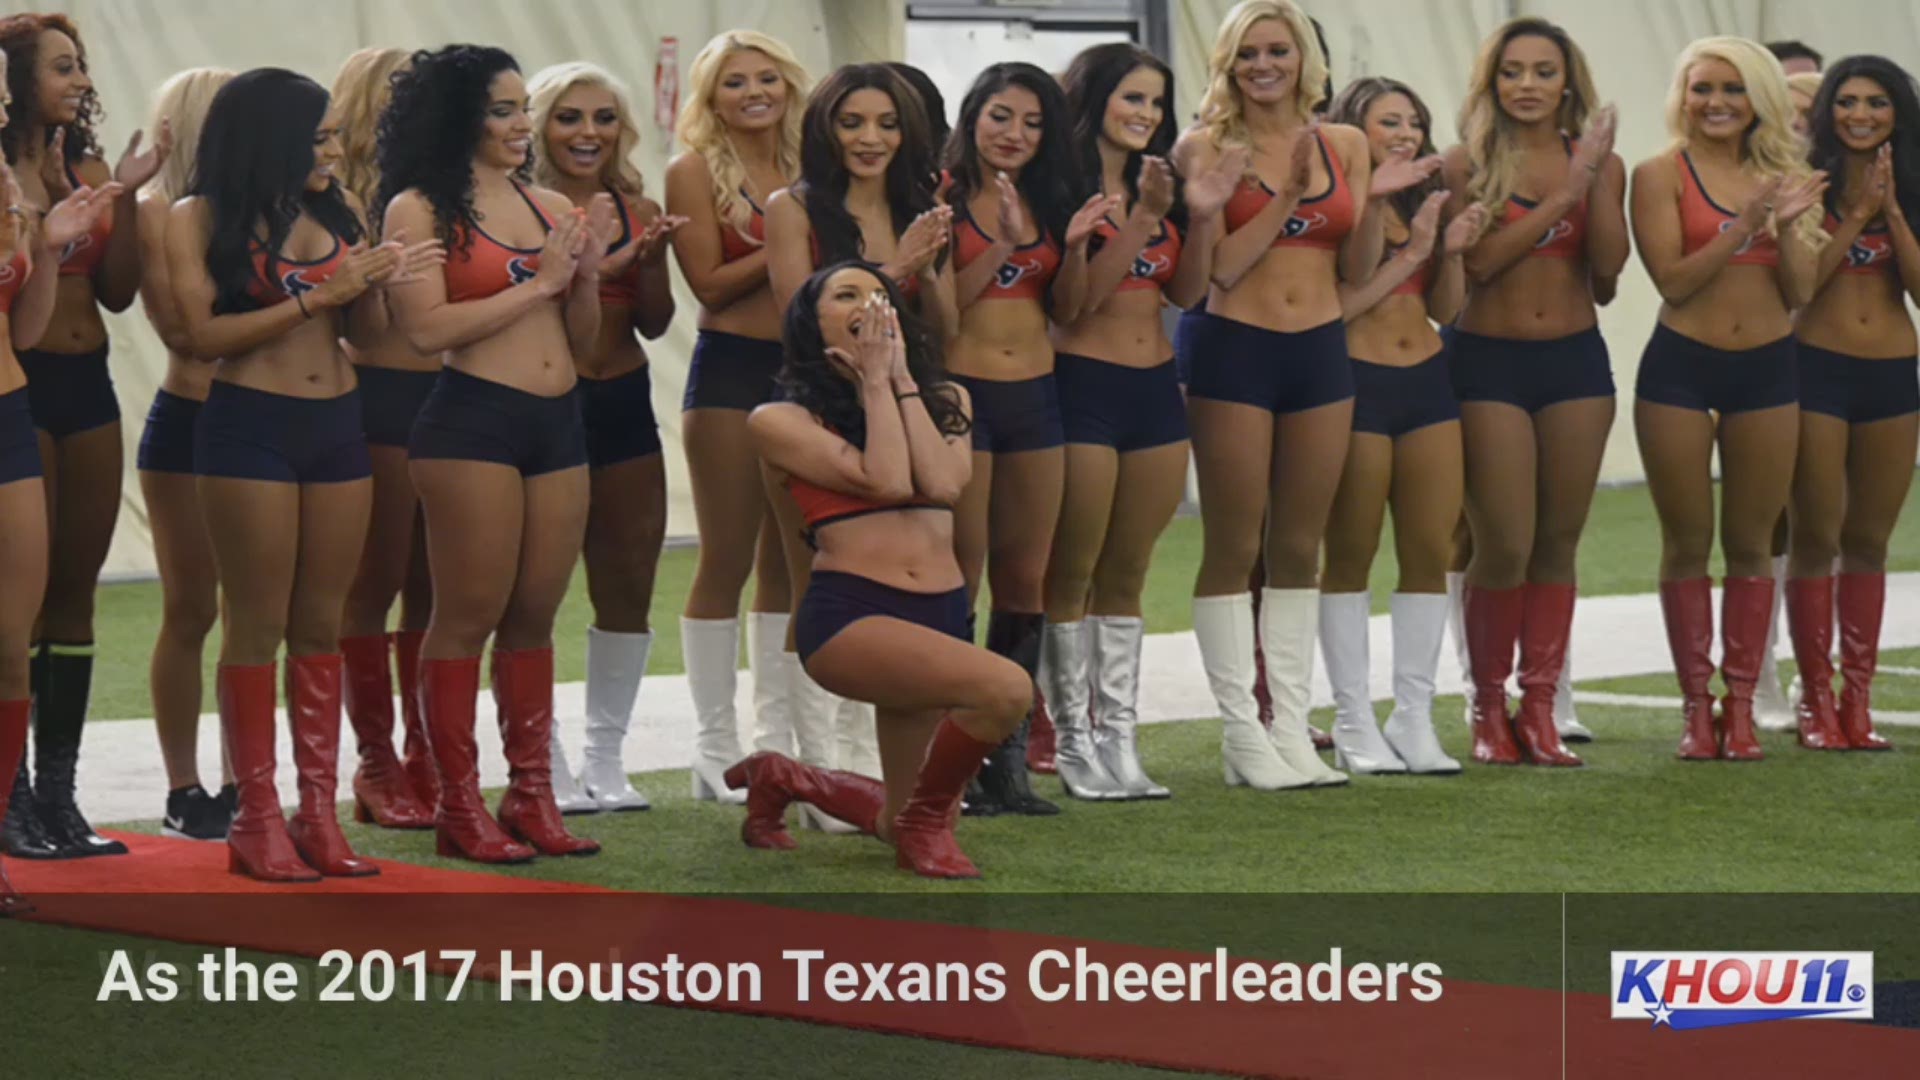 Congratulations to the 2017 Houston Texans Cheerleaders.